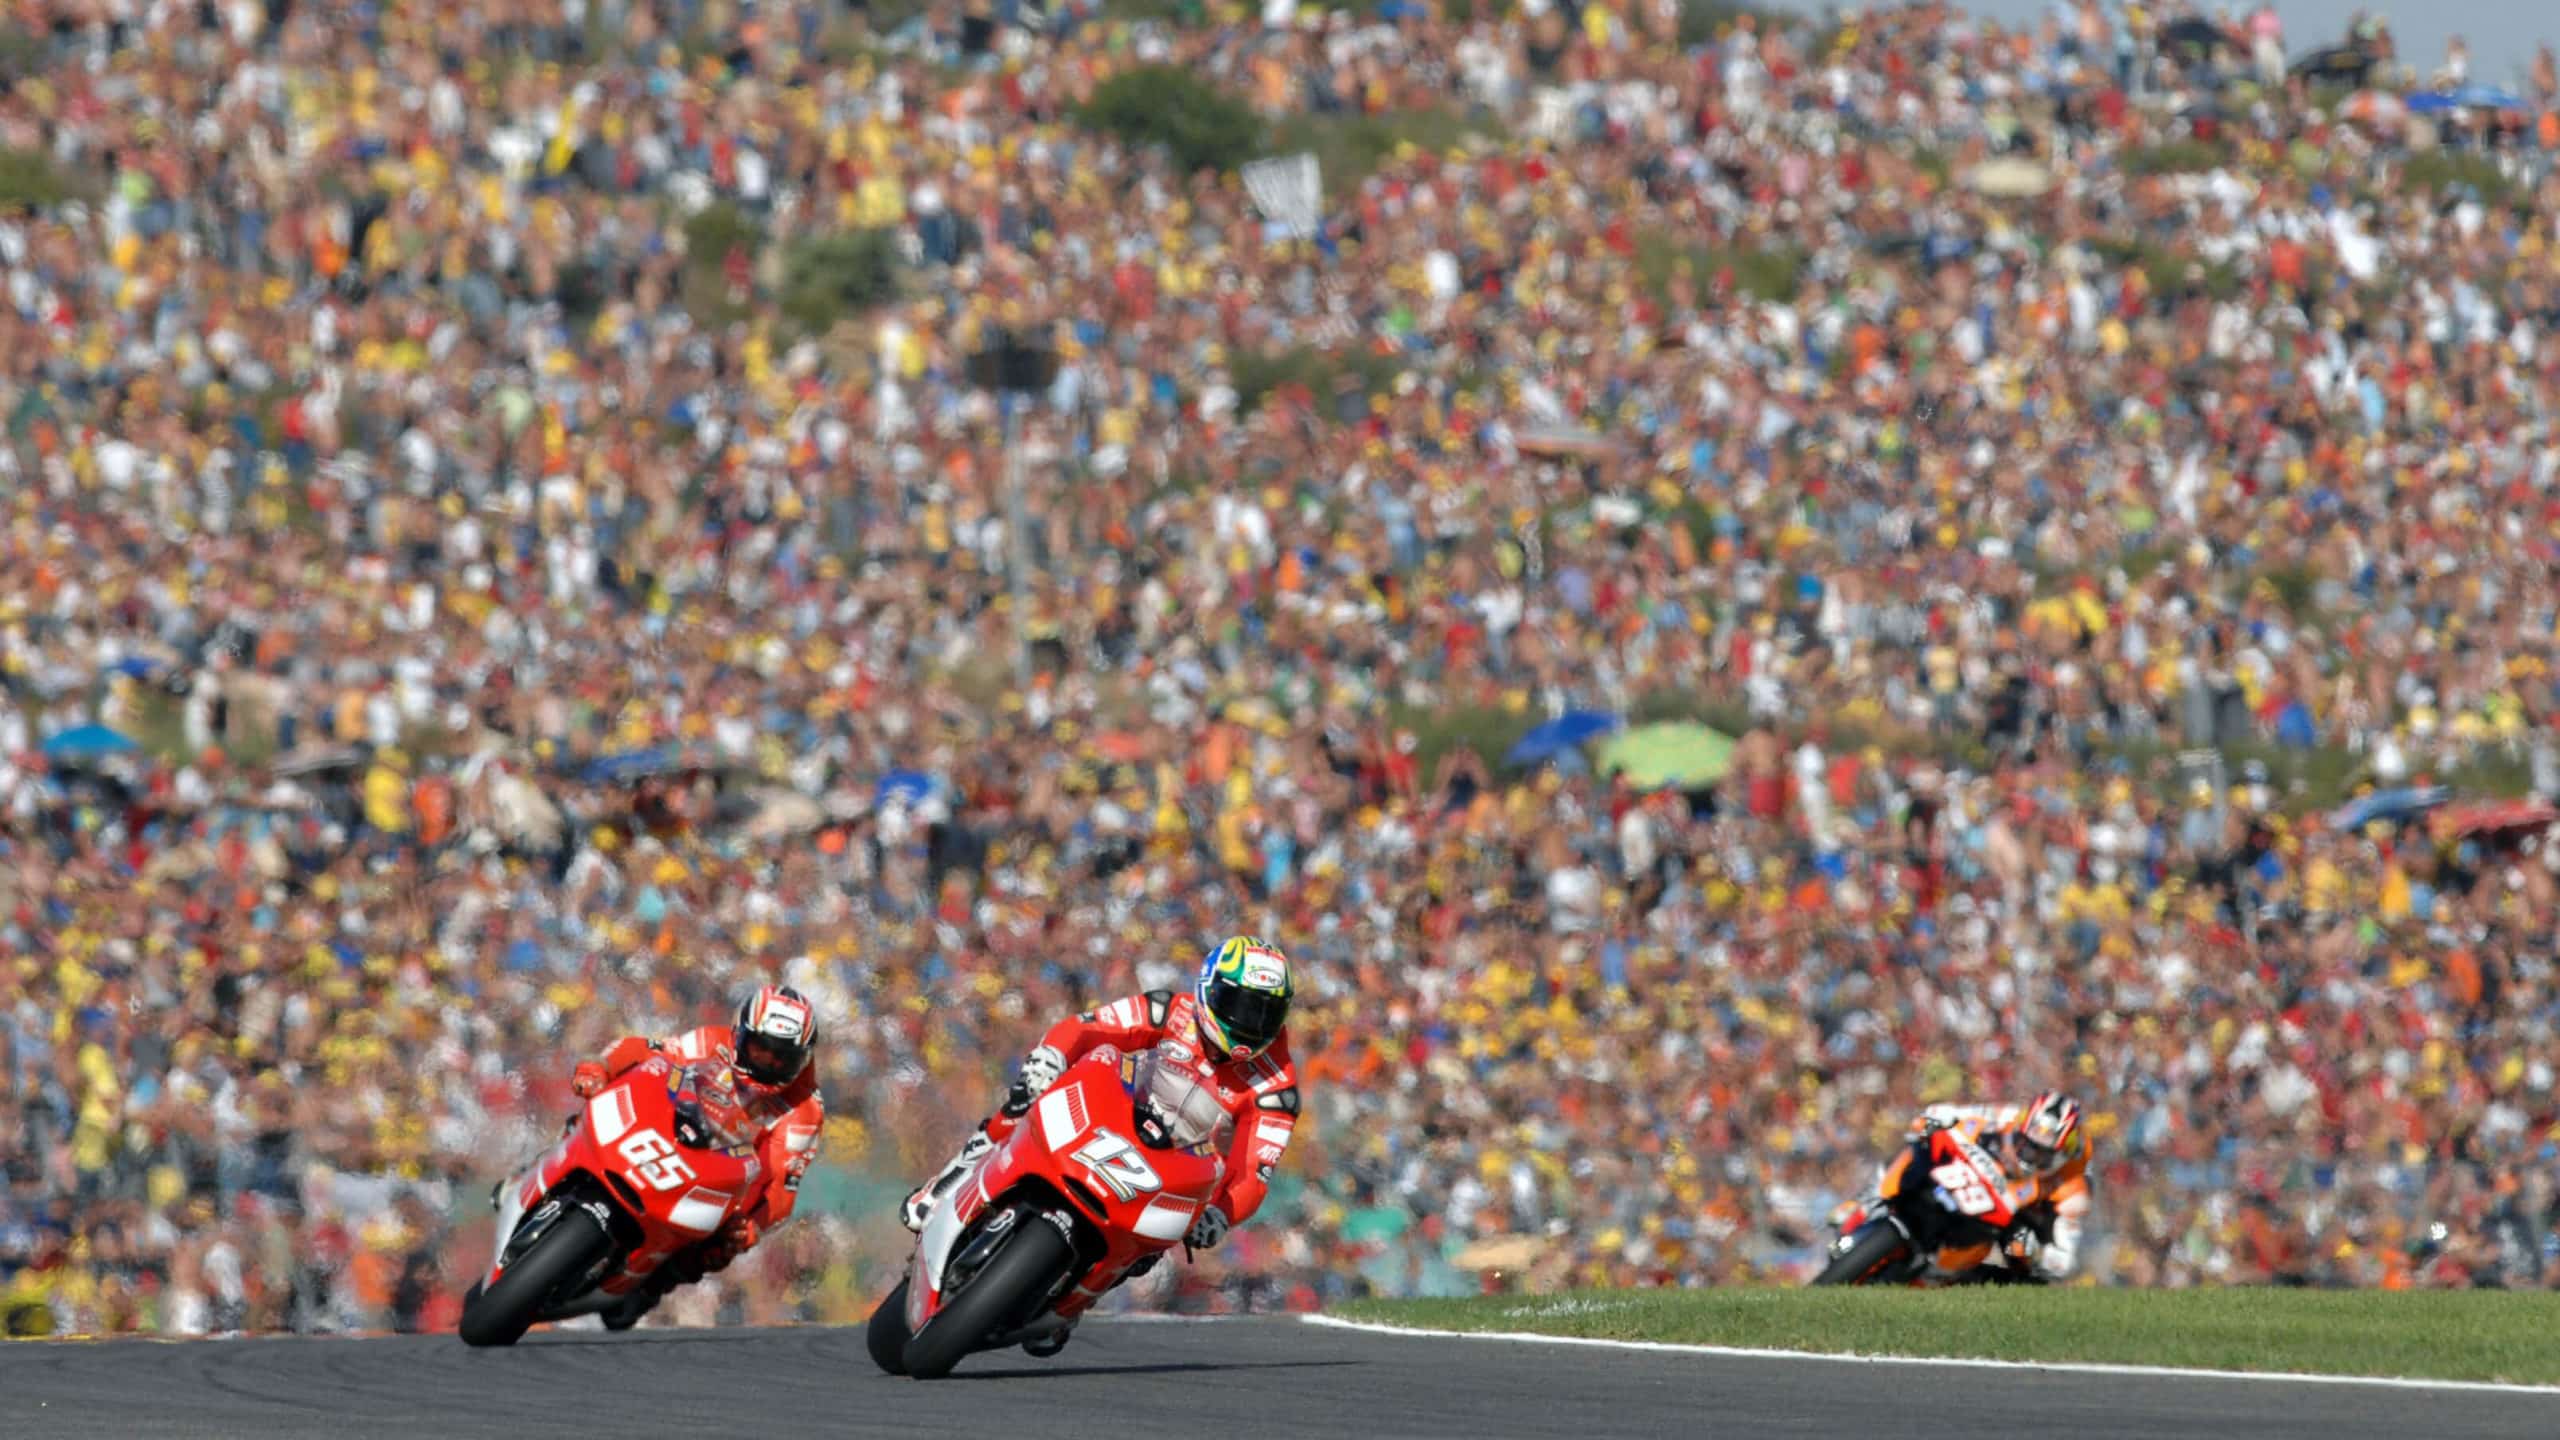 MotoGP's biggest winners: Rossi and Honda - Motor Sport Magazine